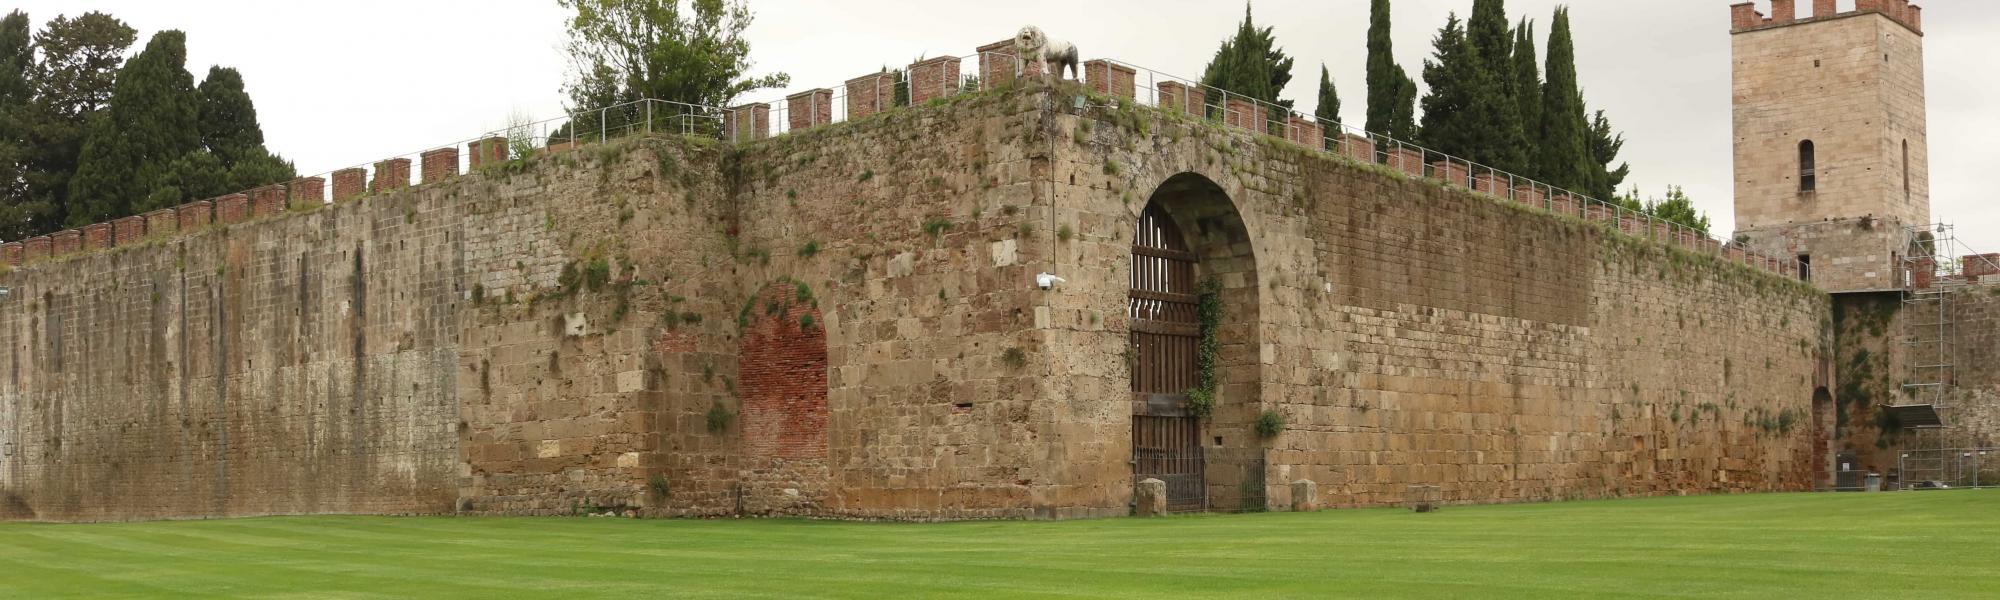 Torre Santa Maria - Mura medievali e porte (A. Matteucci)